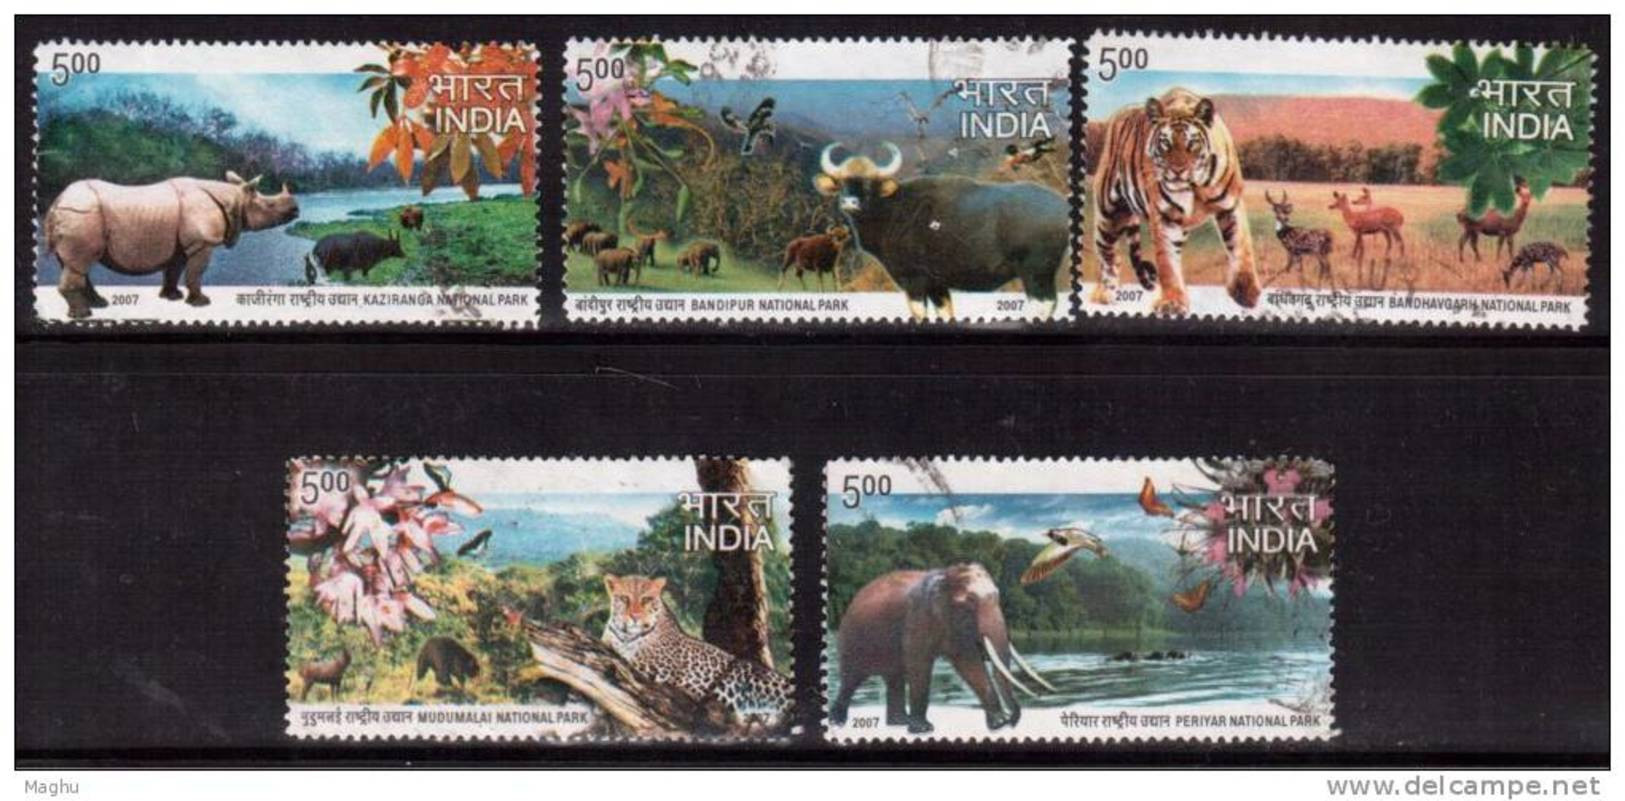 India Used 2007, Set Of 5, National Parks,  Animal, Elephant, Rhino, Leopard, Tiger, Nature, (sampe Image) - Used Stamps